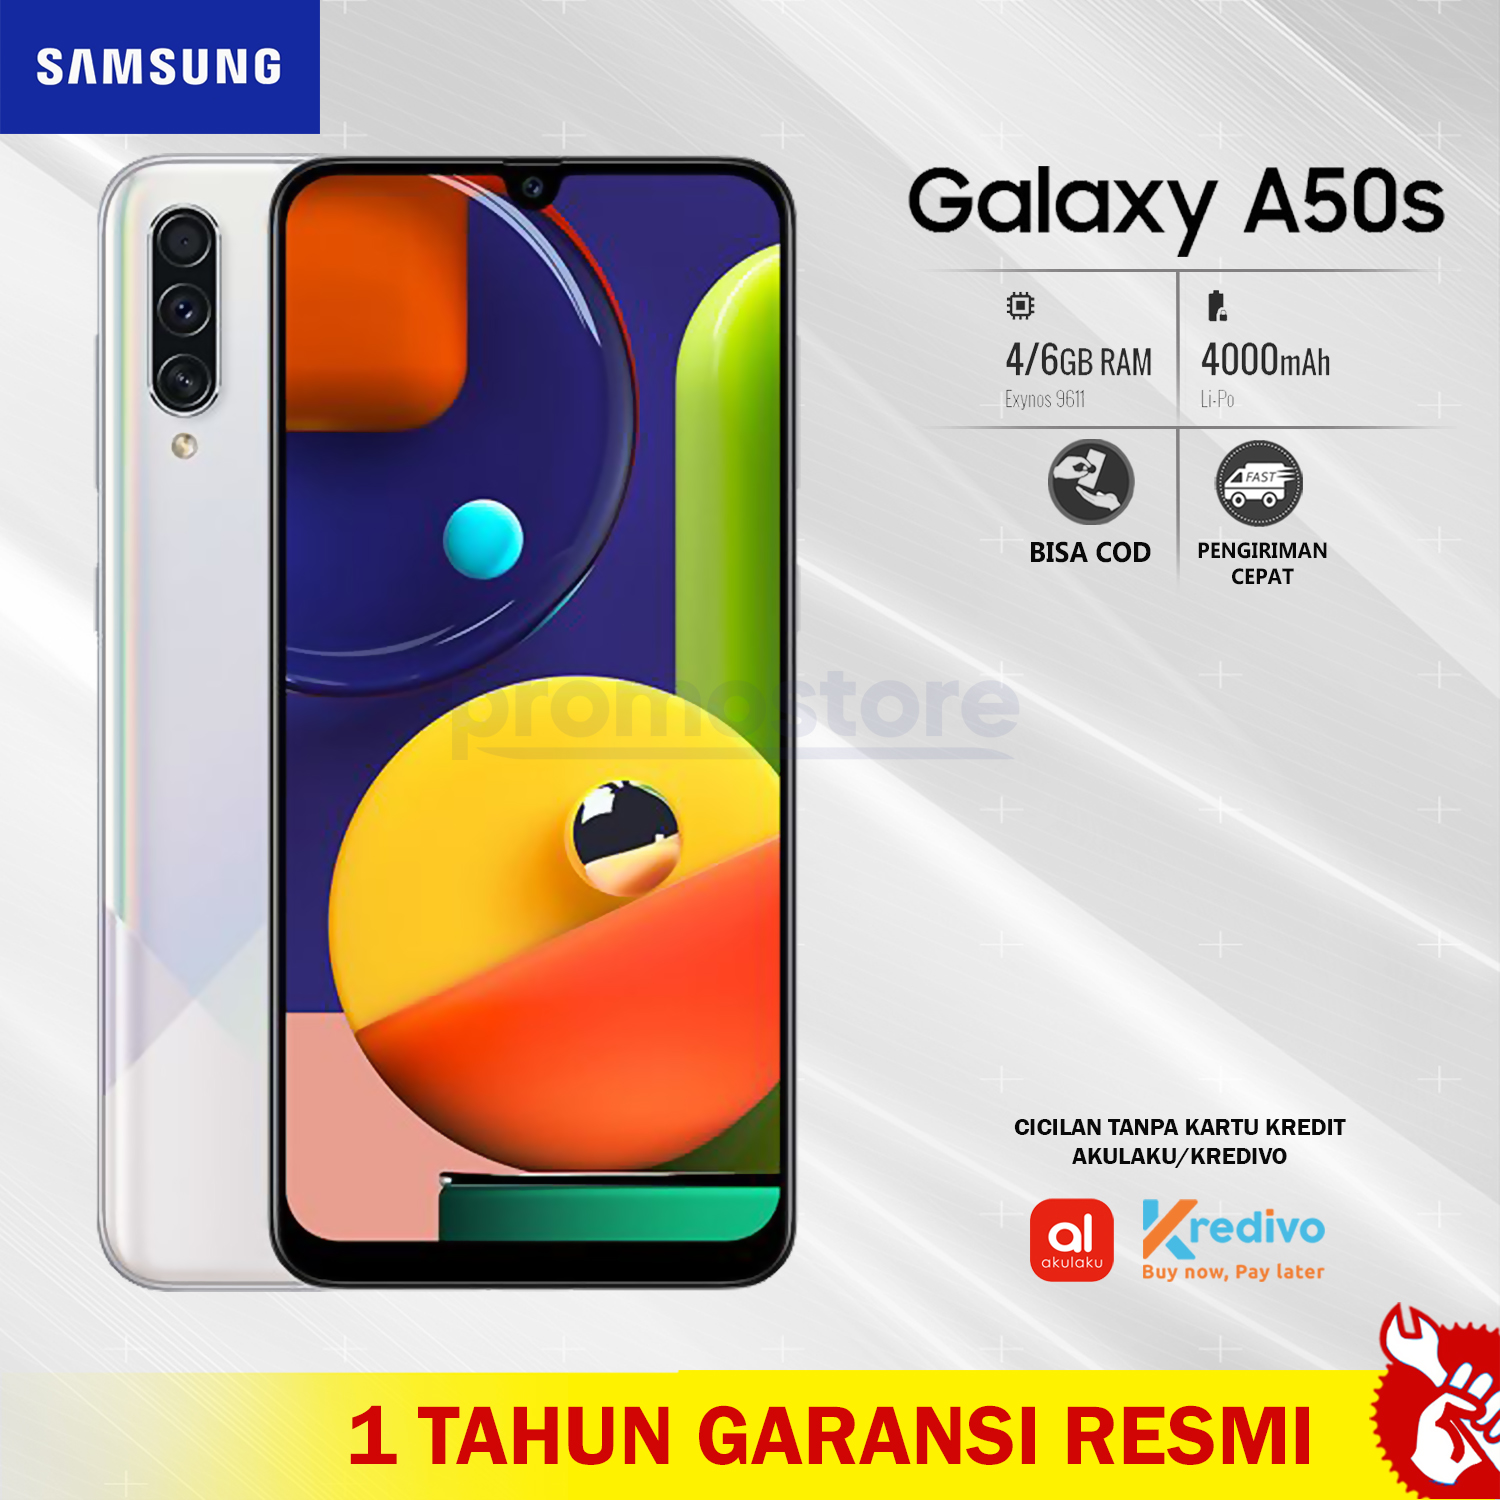 Samsung galaxy a50s 6/128 GB - GARANSI RESMI SEIN - NEW